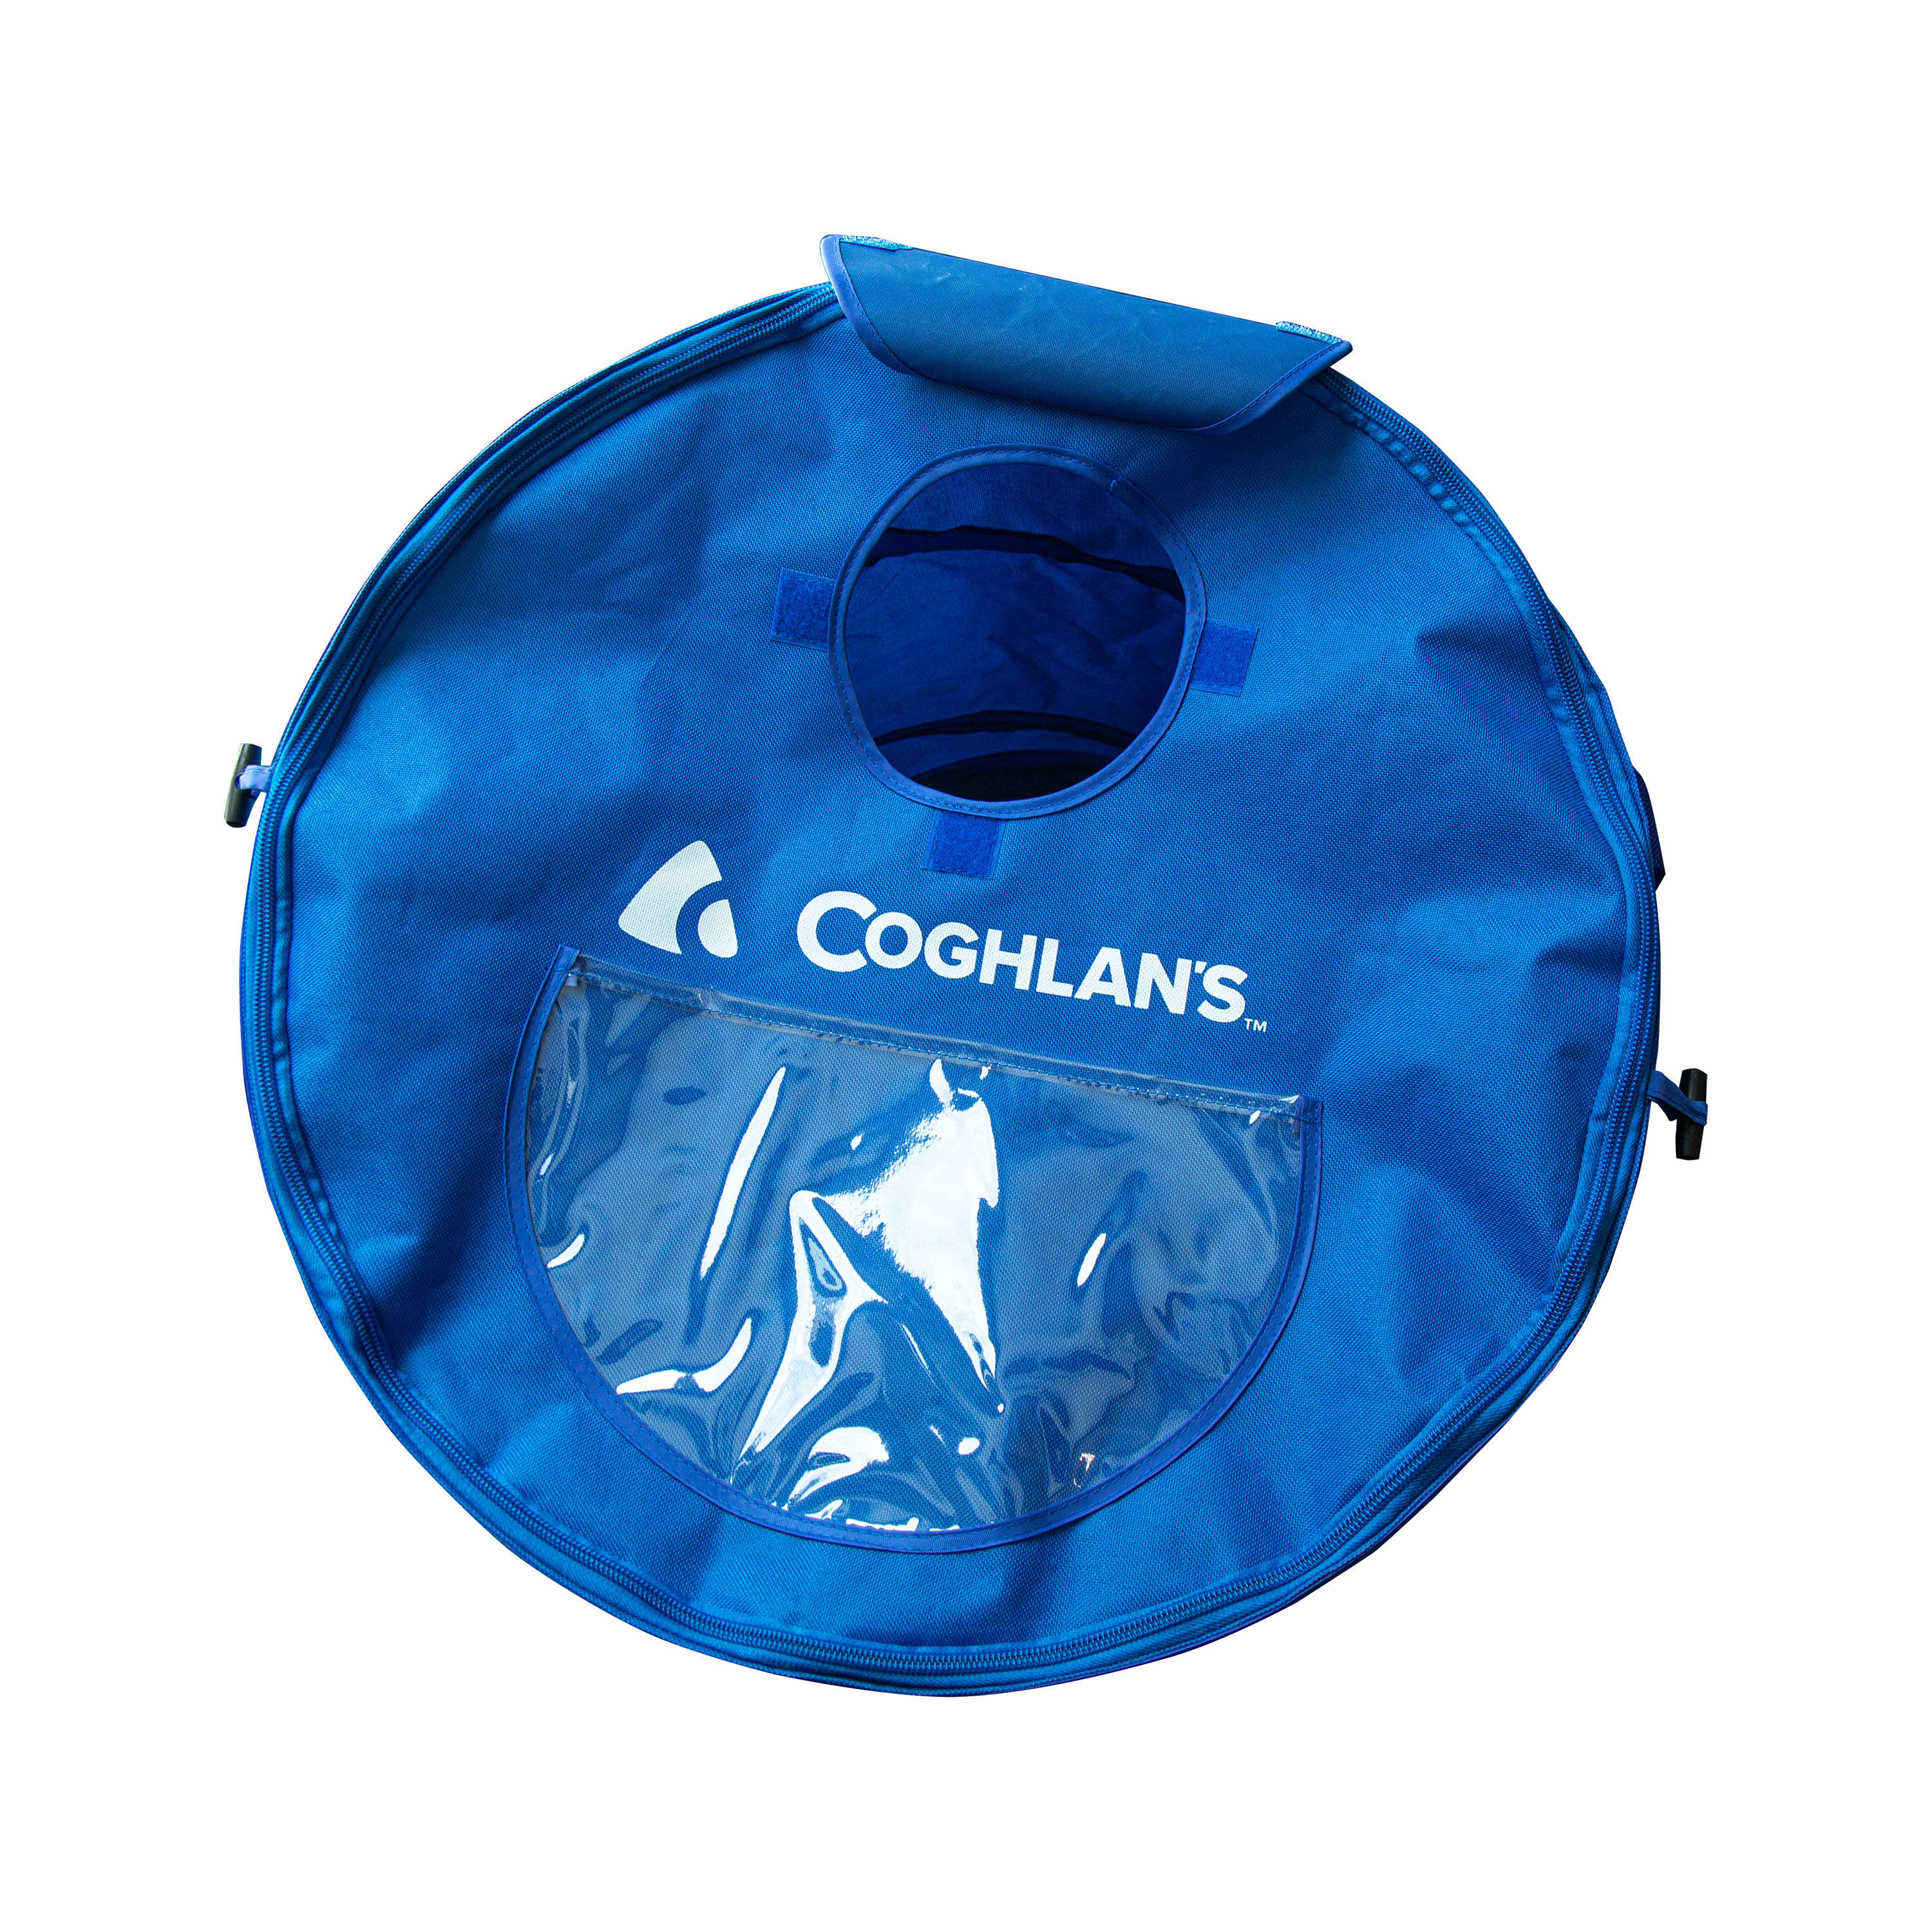 Coghlan's® Deluxe Pop-Up Recycling Bin